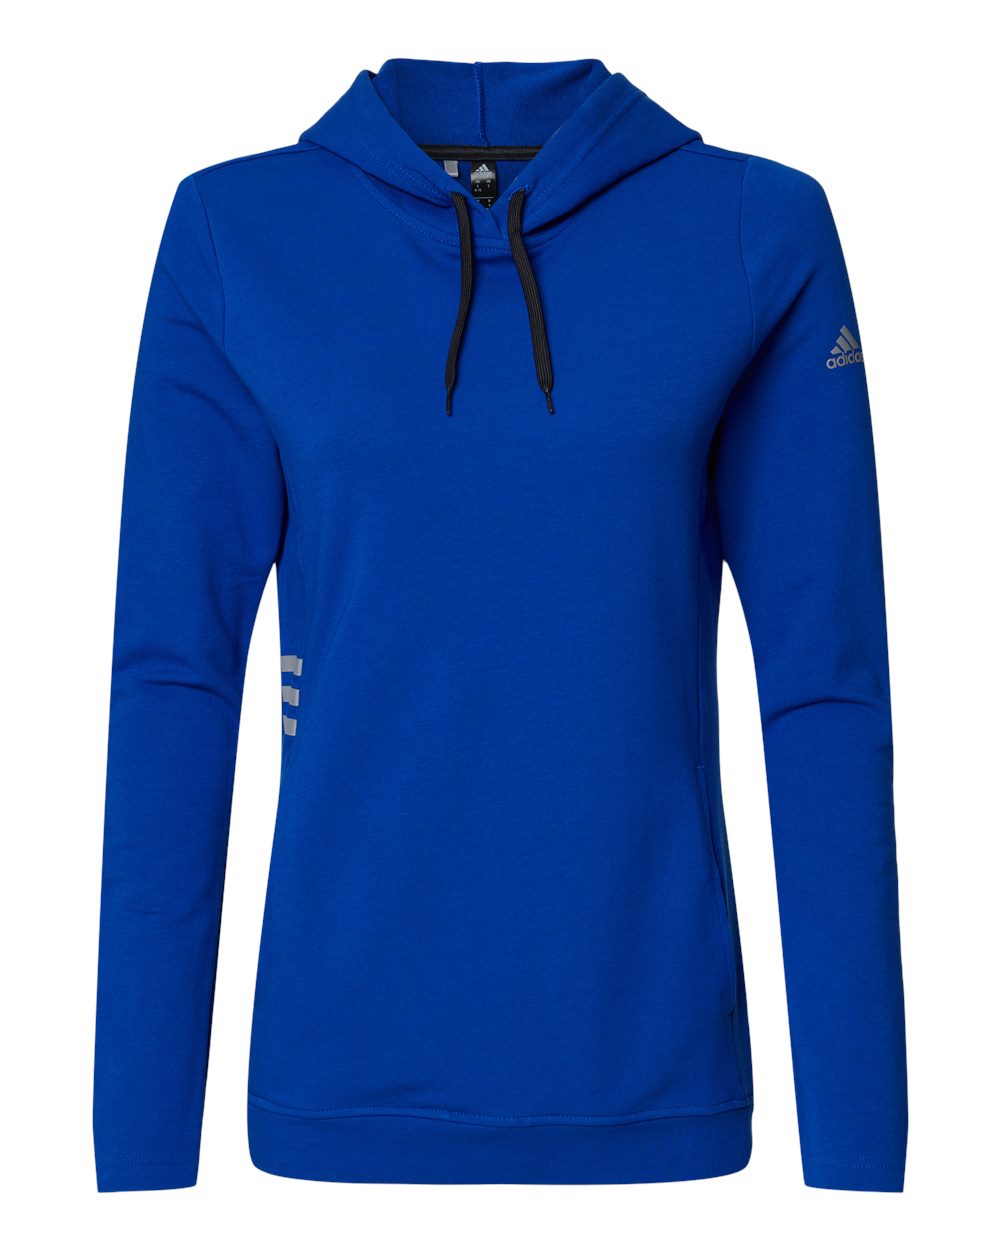 Picture of Adidas - Women's Lightweight Hooded Sweatshirt